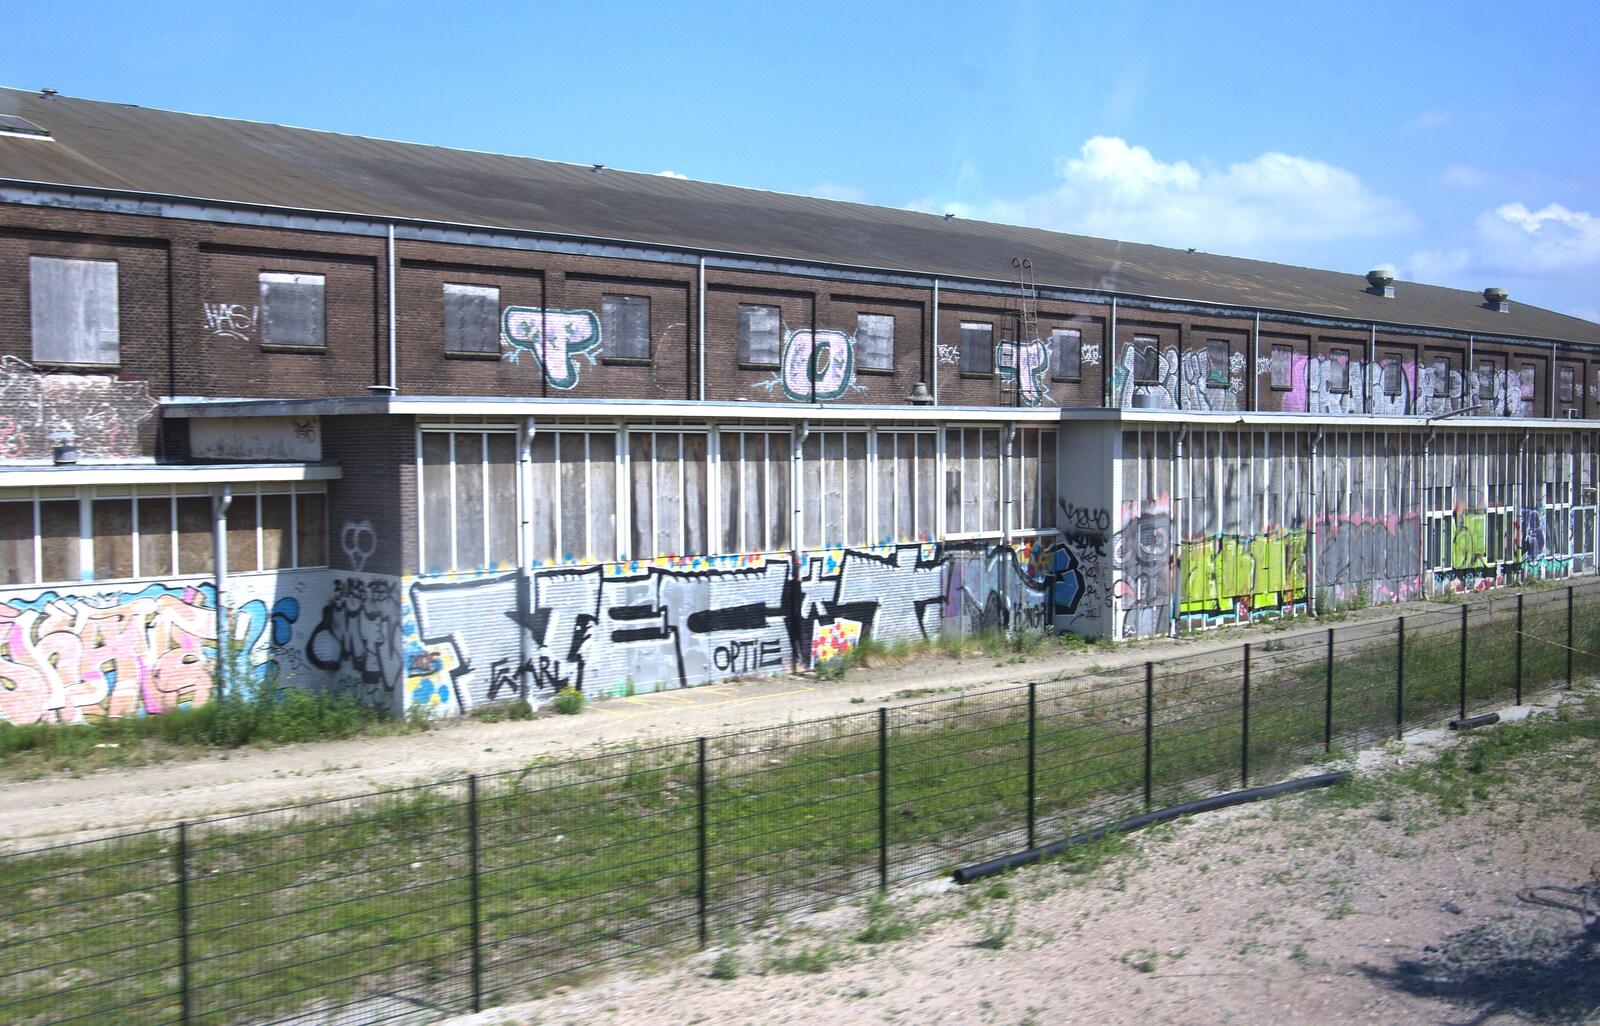 Derelict buildings from A Postcard from Utrecht, Nederlands - 10th June 2018